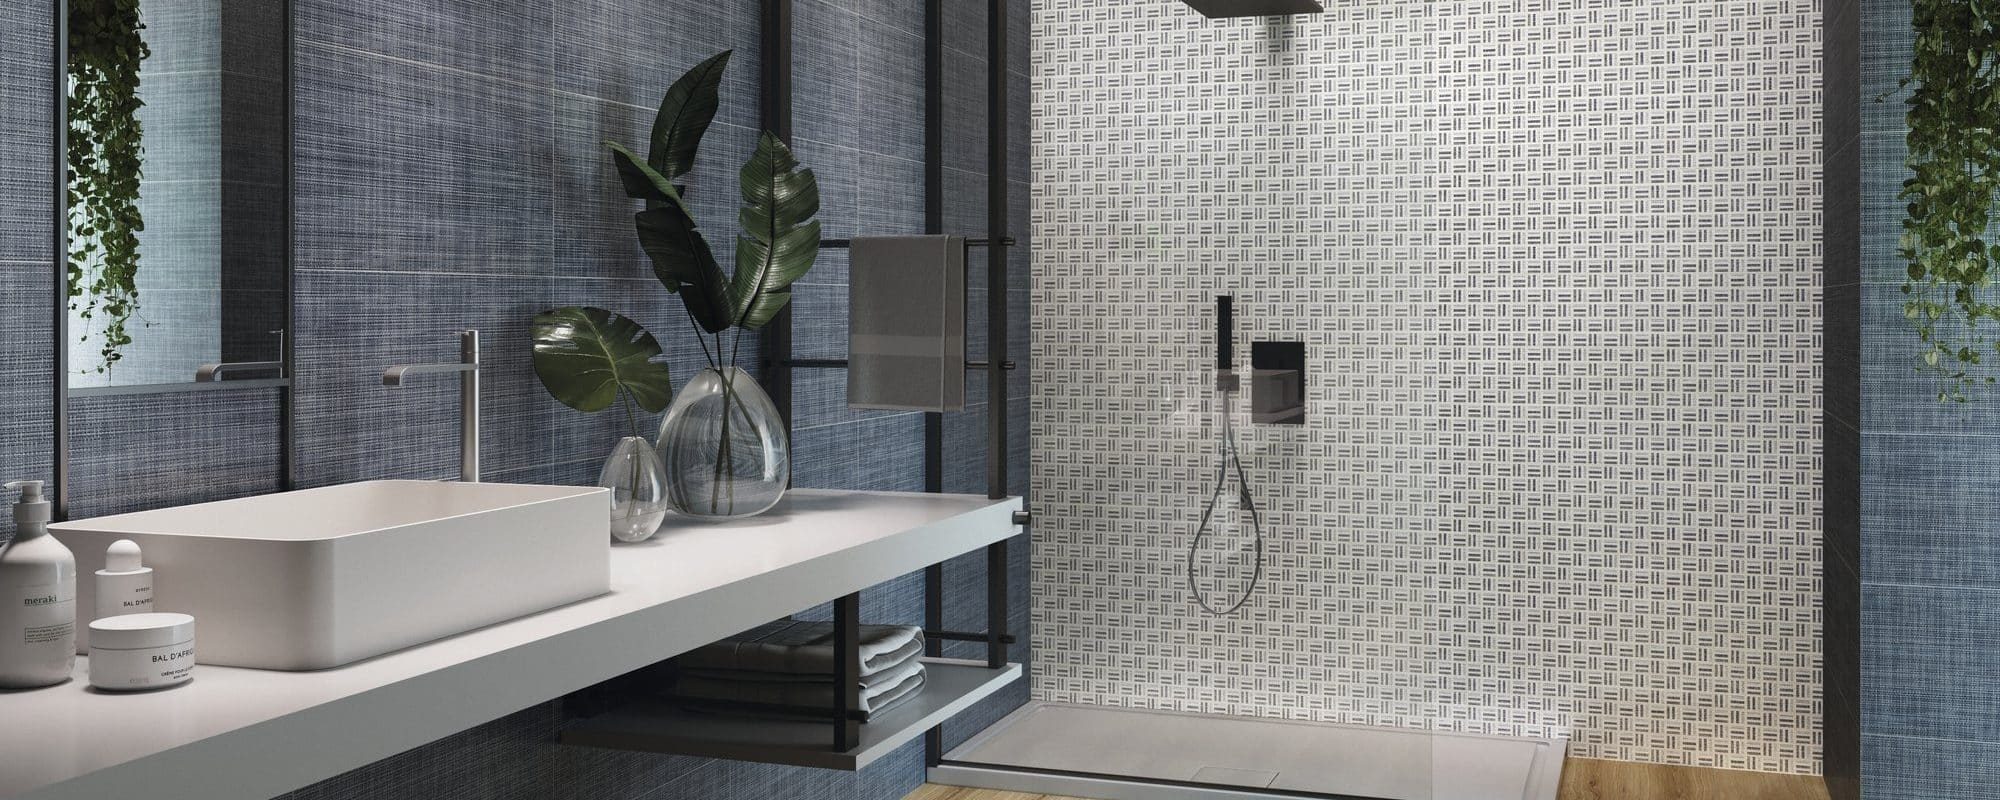 HABITAT hexagonal bathroom tiles uk slider